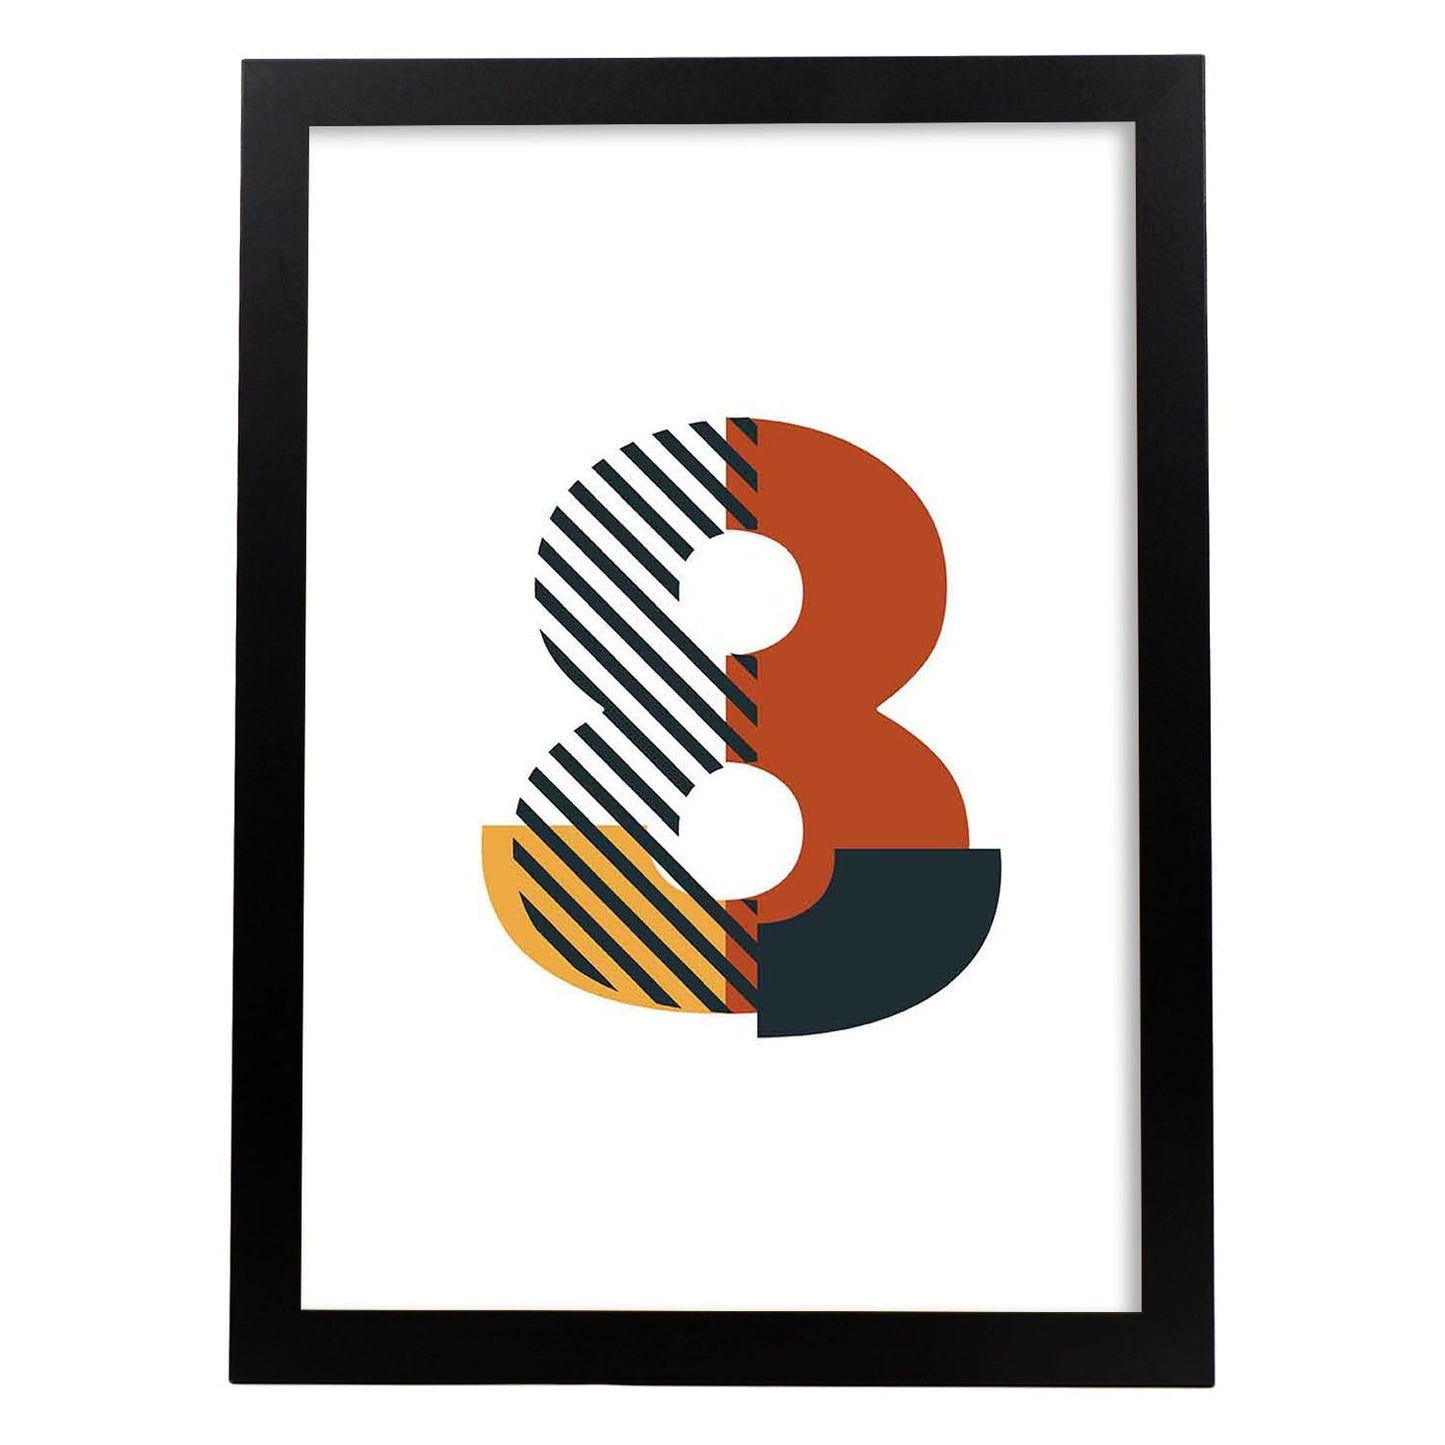 Poster de número 8. Lámina estilo Geometria con imágenes del alfabeto.-Artwork-Nacnic-A4-Marco Negro-Nacnic Estudio SL